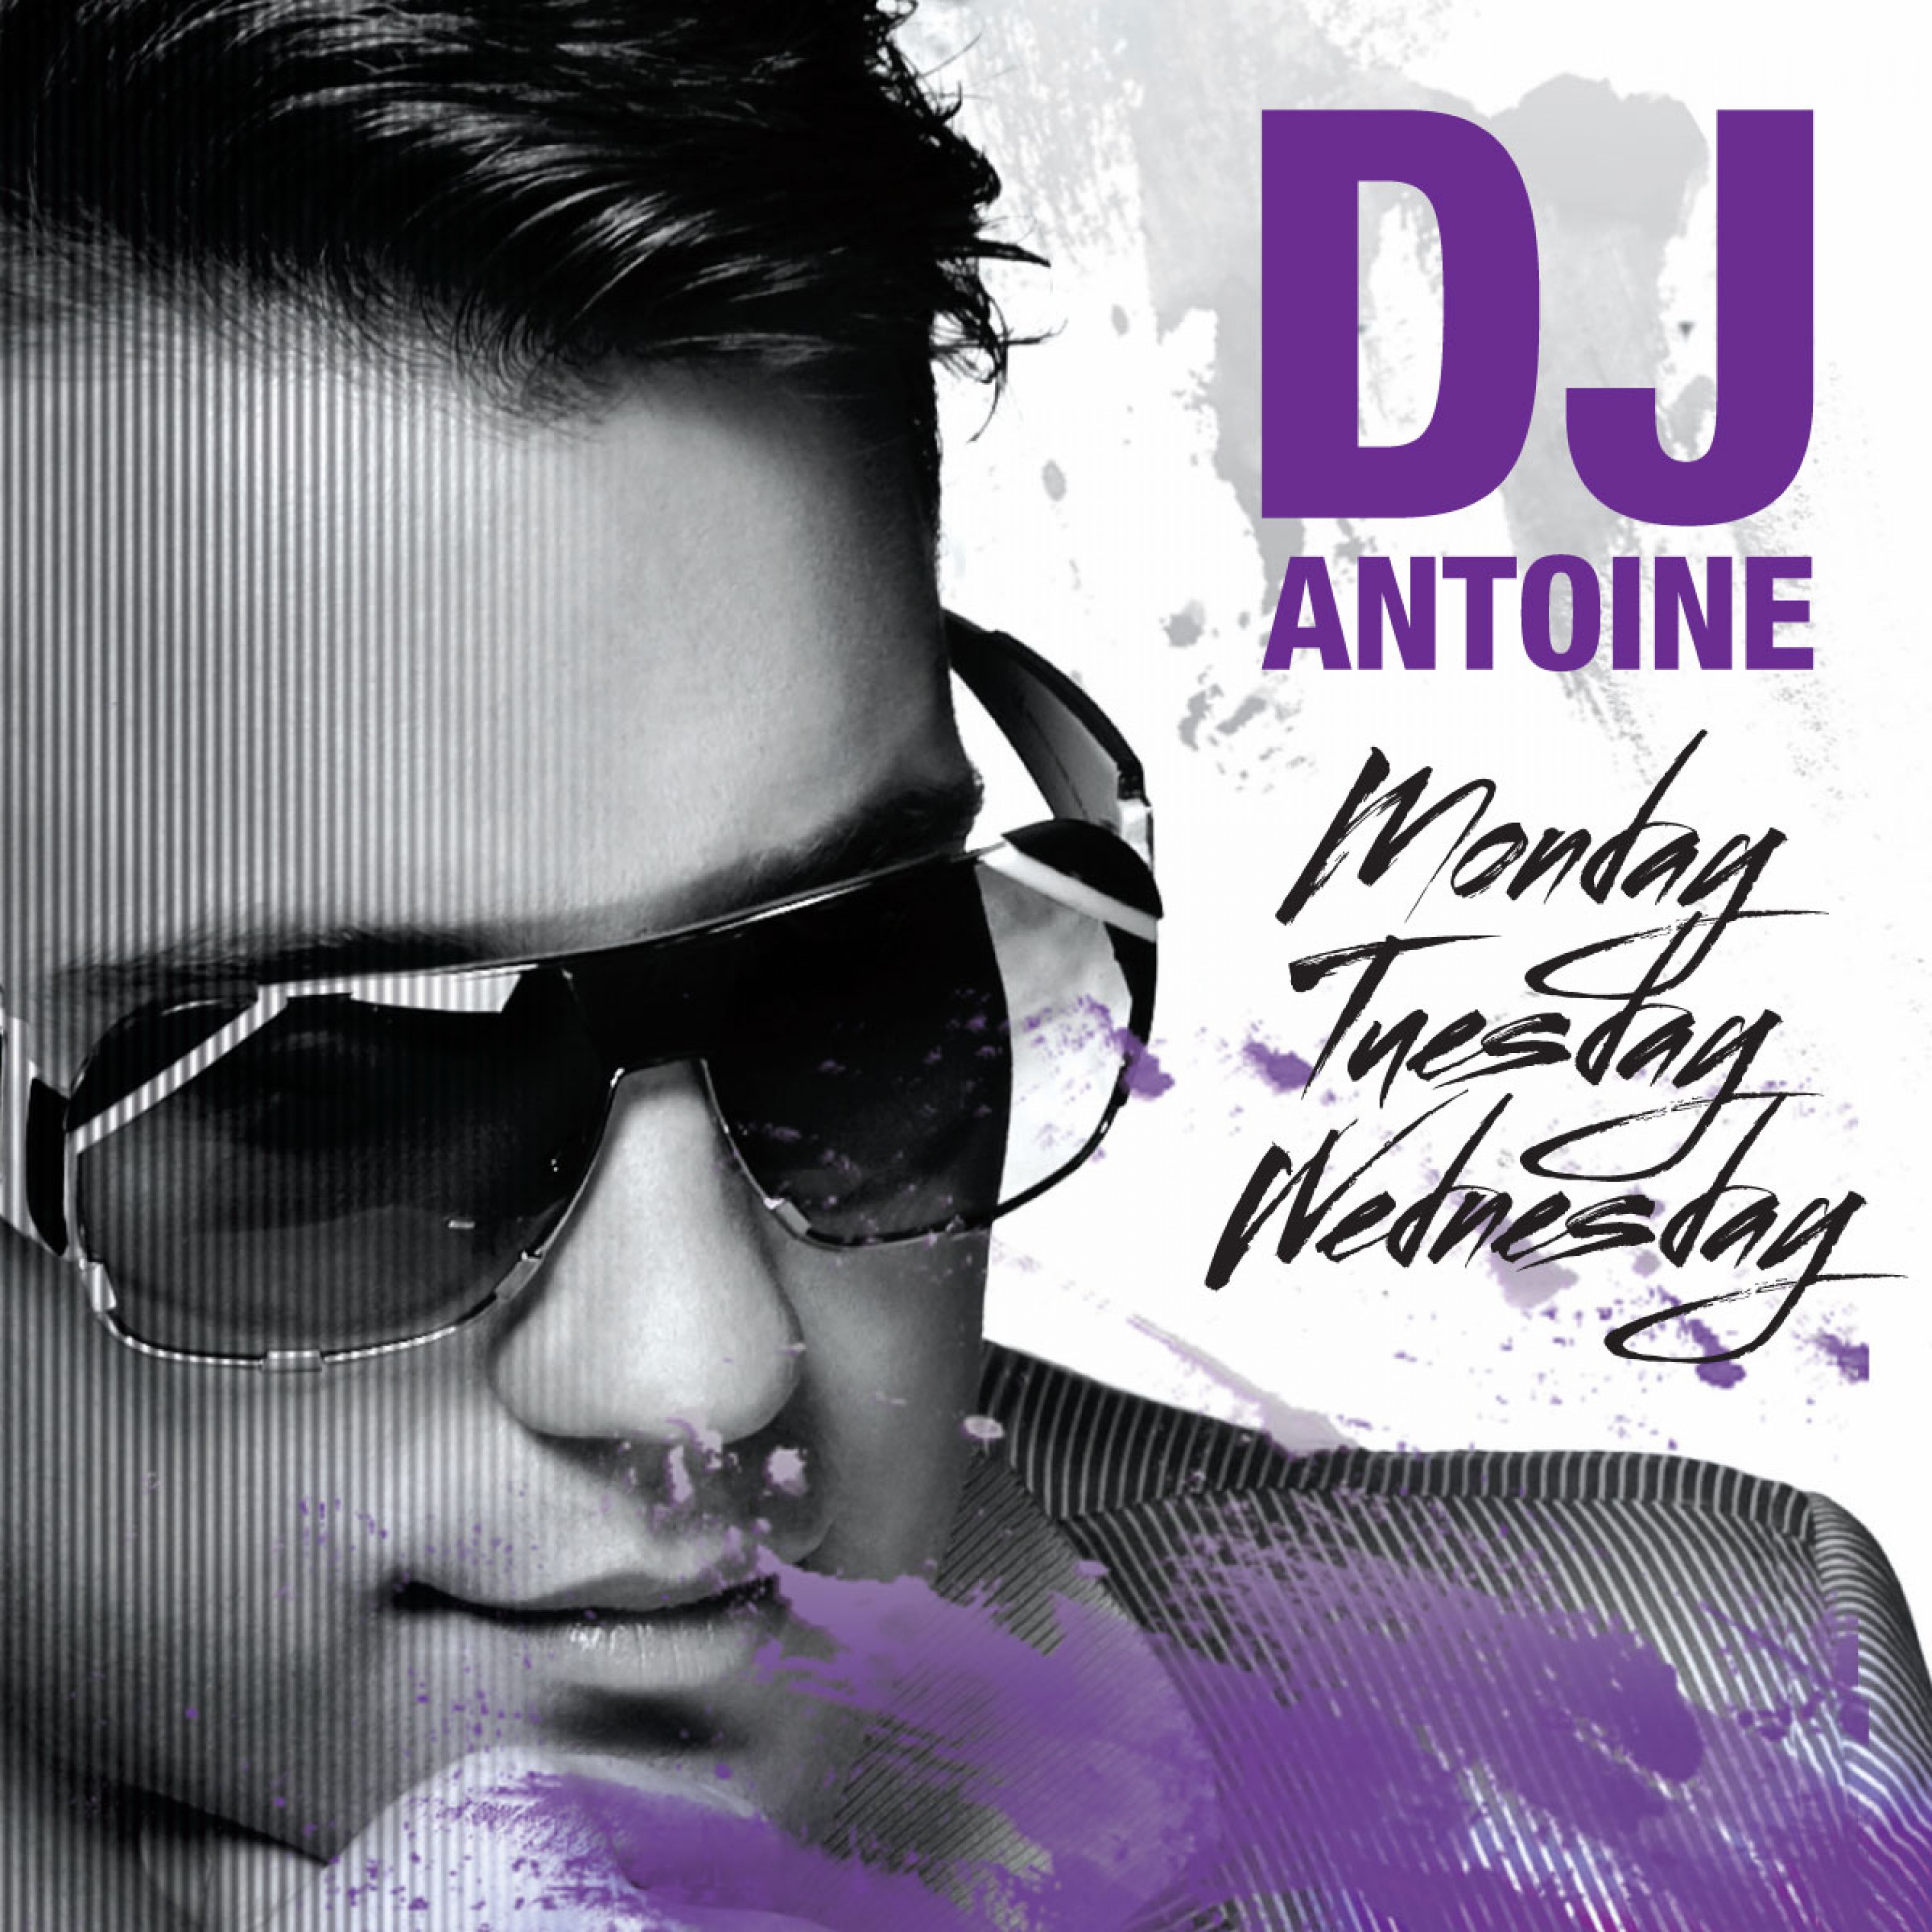 Monday, Tuesday, Wednesday (DJ Antoine vs Mad Mark Lounge Mix)